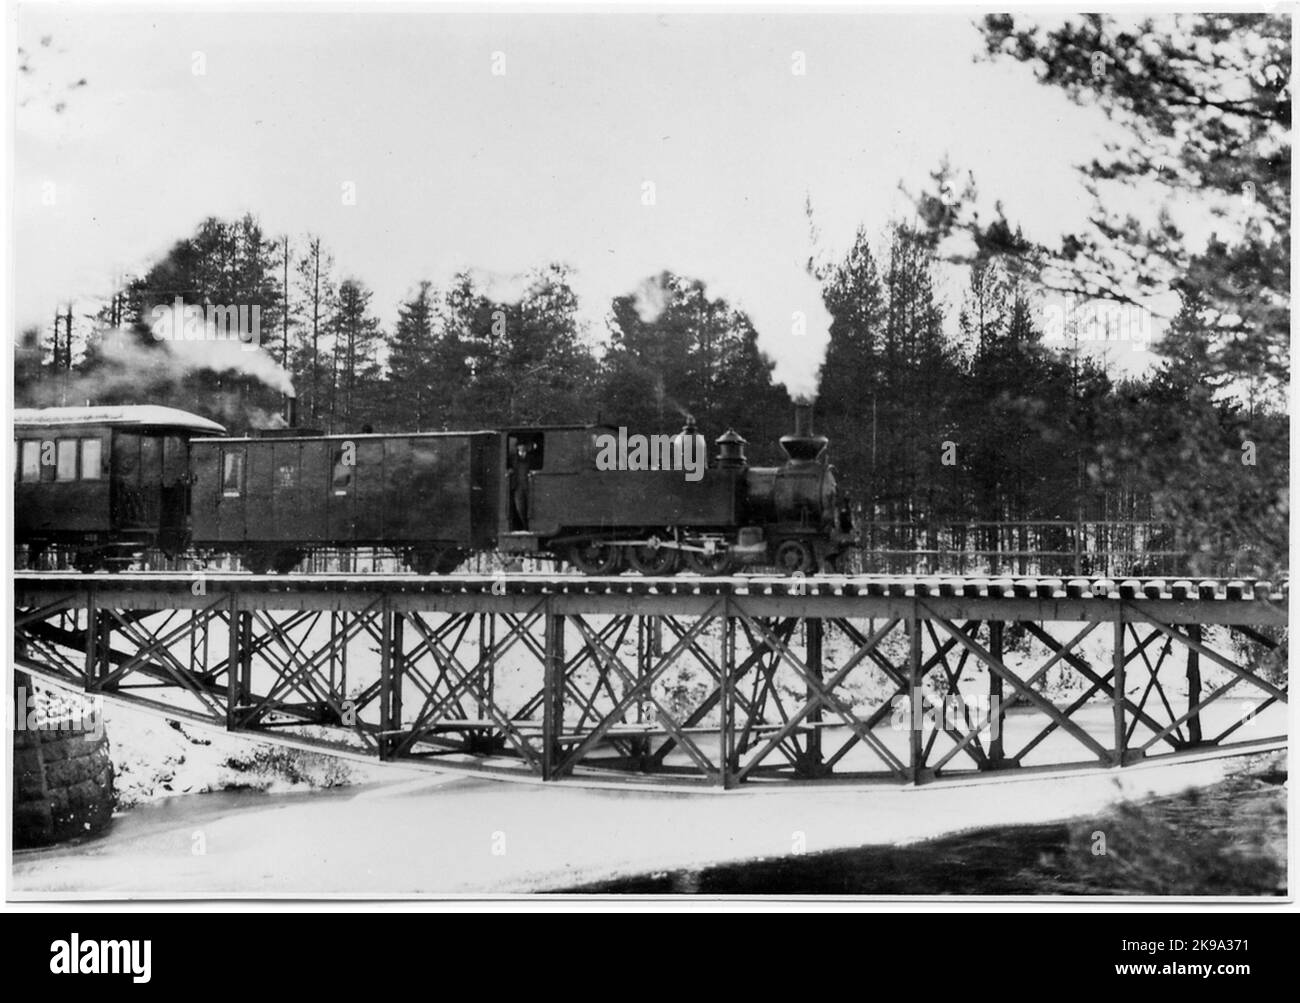 Voxna - Lobonäs Railway, WLJ LOK 2 on the line between Voxna and Lobonäs. Stock Photo